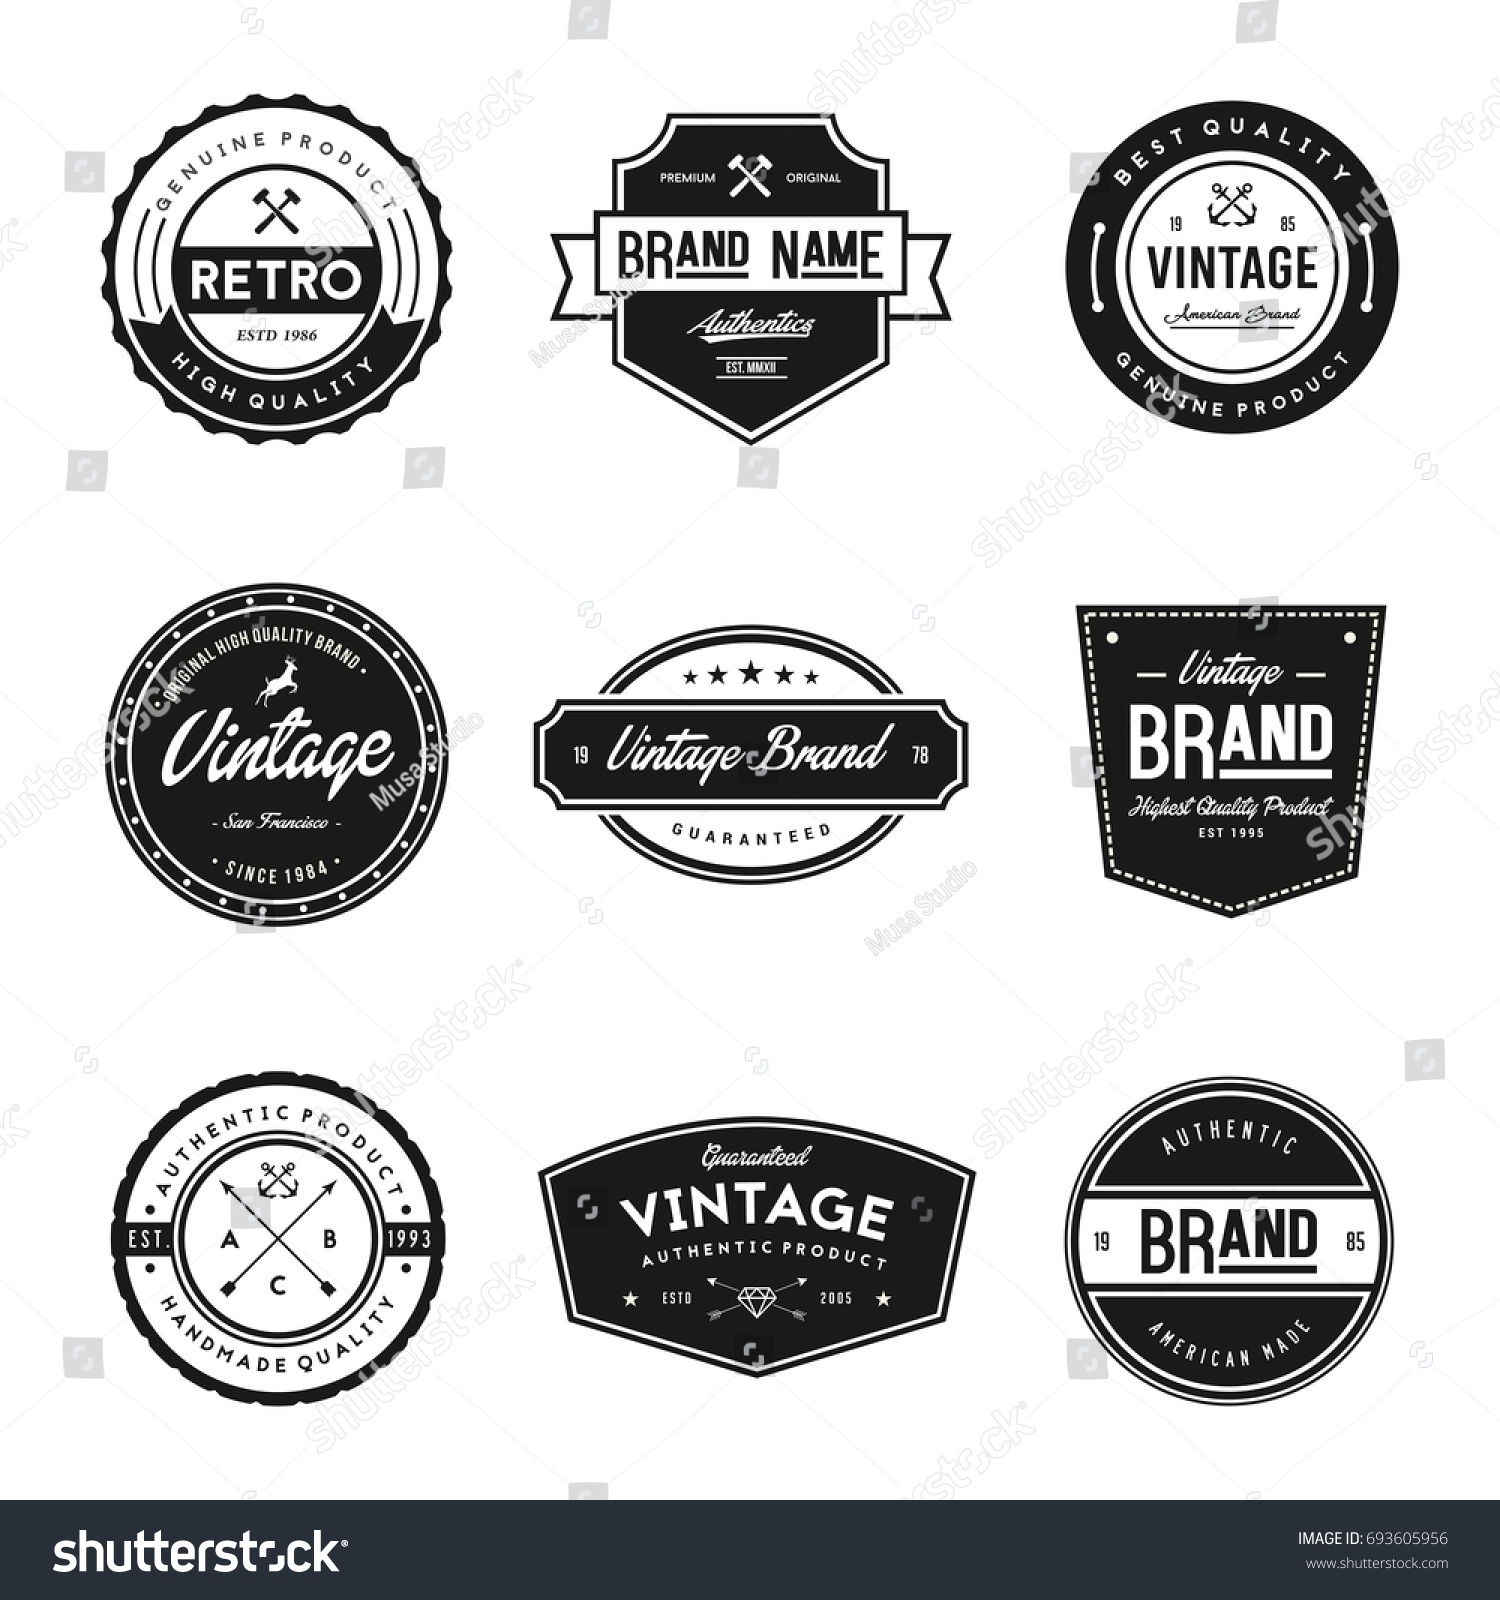 1,092,508 Round logo design Images, Stock Photos & Vectors | Shutterstock